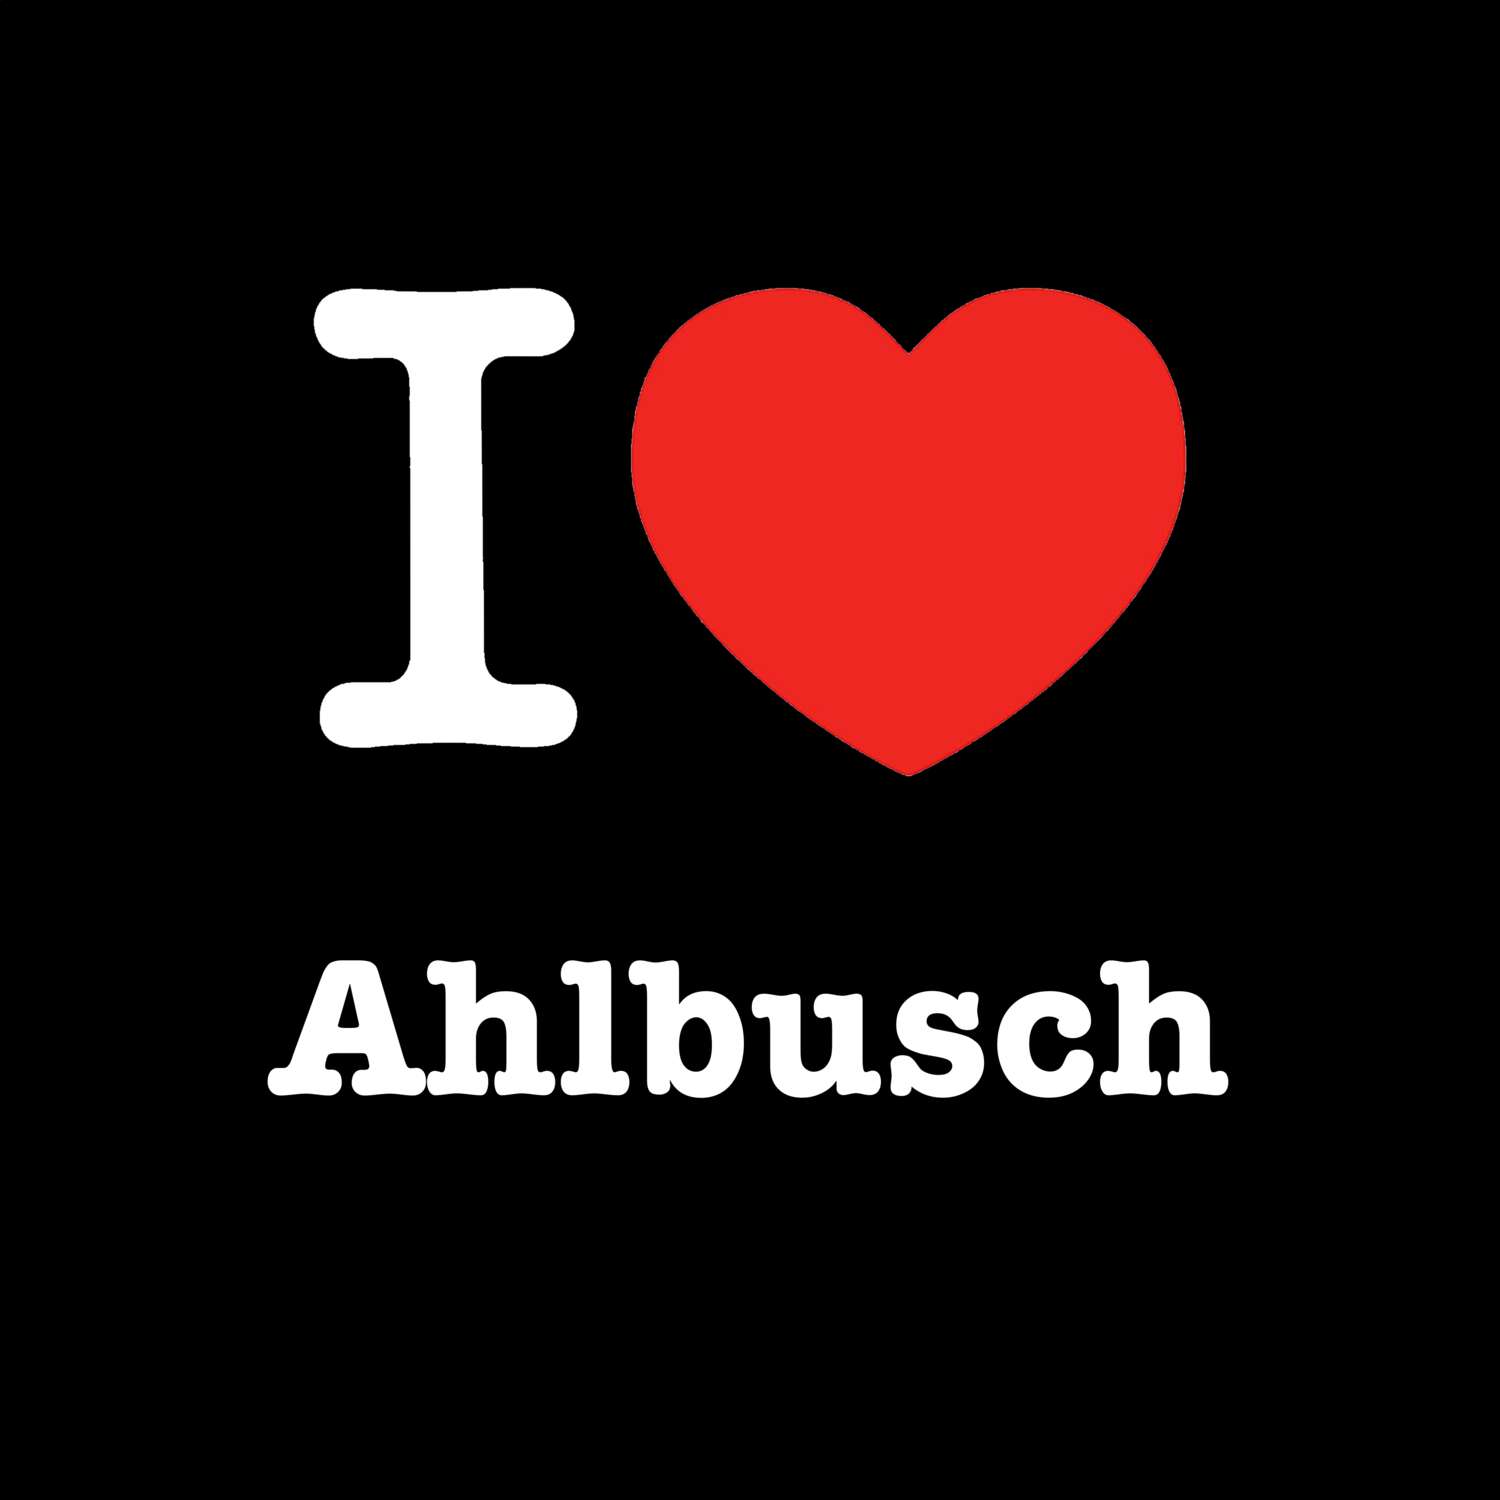 Ahlbusch T-Shirt »I love«